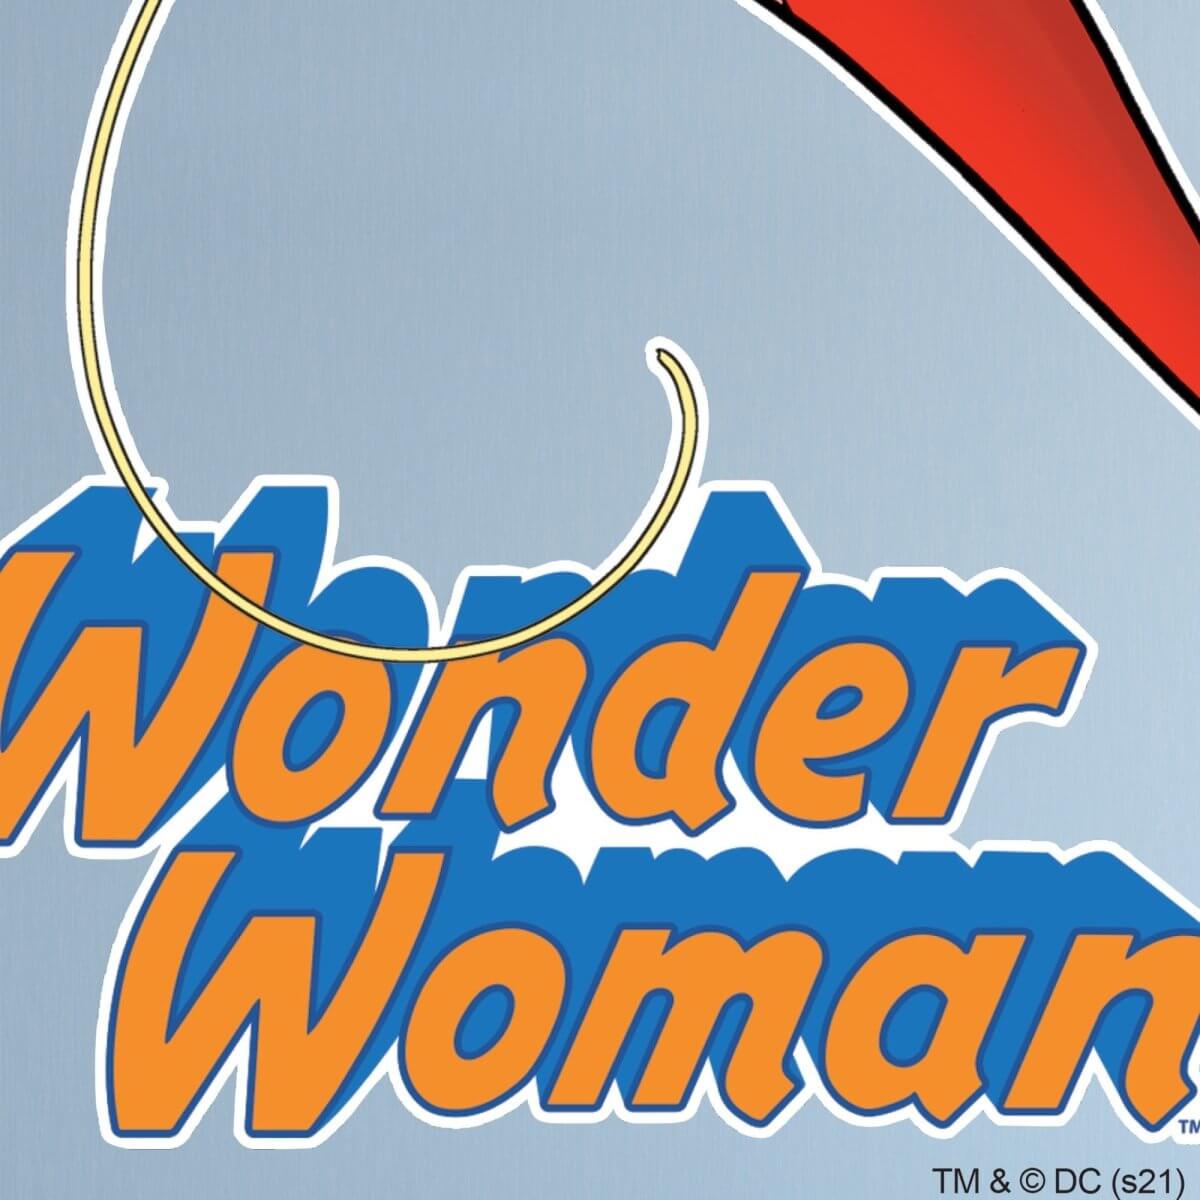 Kismet Decals Evolution of Wonder Woman Original Artwork 1972 Officially Licensed Wall Sticker - Easy DIY DC Comics Home, Kids or Adult Bedroom, Office, Living Room Decor Wall Art - Kismet Decals